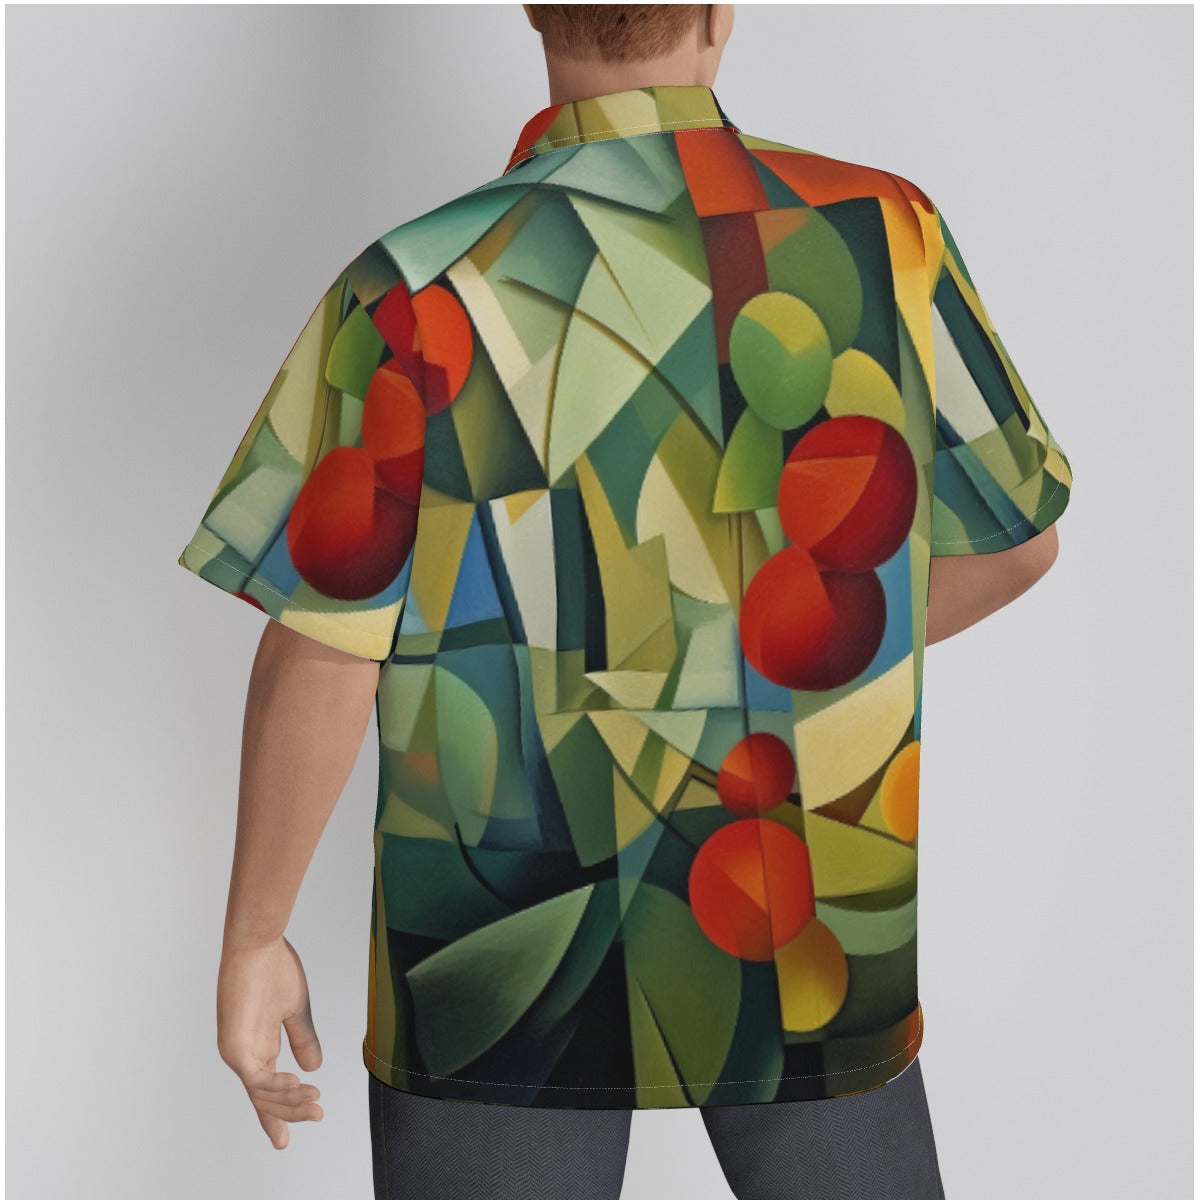 3QYNN All-Over Print Men's Hawaiian Shirt With Button Closure |115GSM Cotton poplin